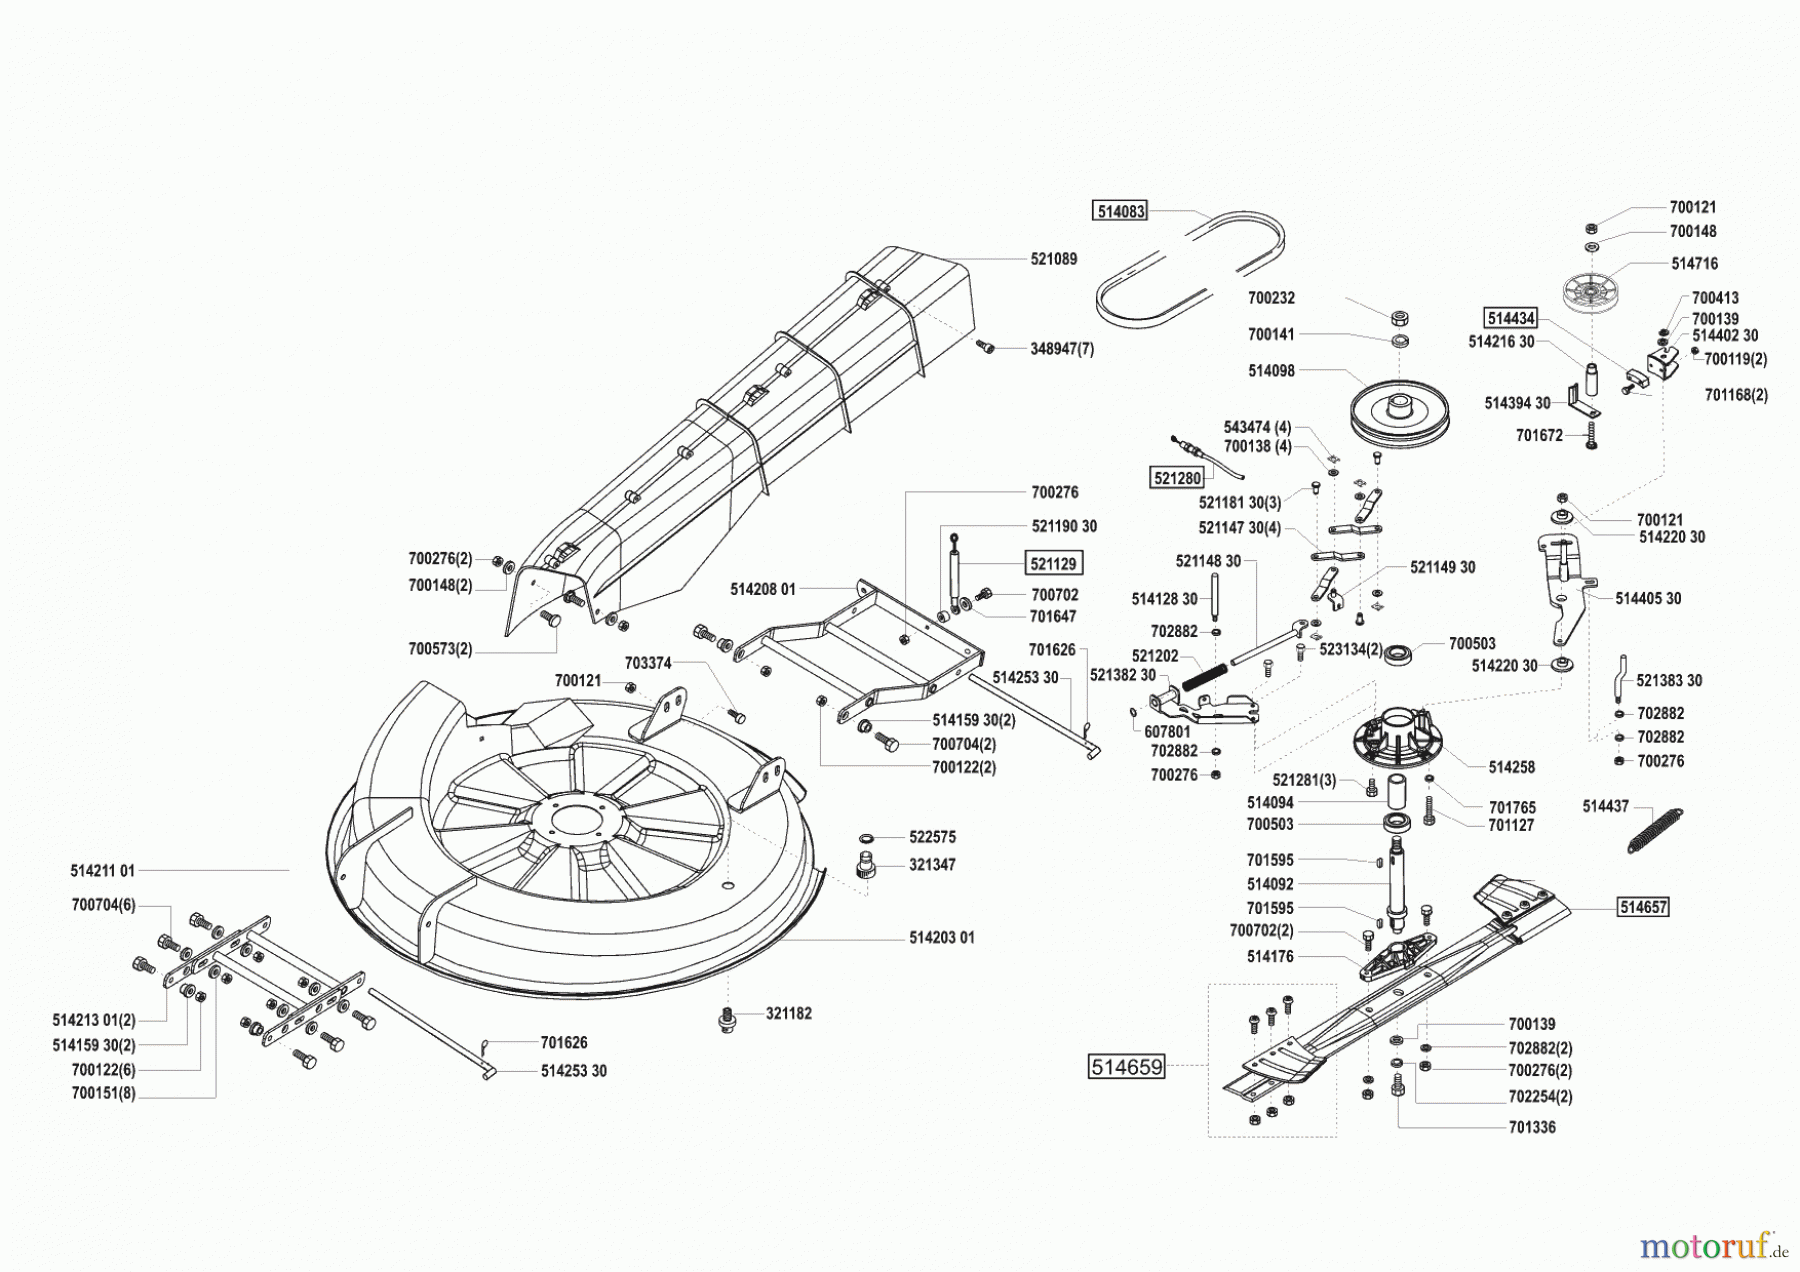  AL-KO Gartentechnik Rasentraktor T 850 vor 02/2002 Seite 5